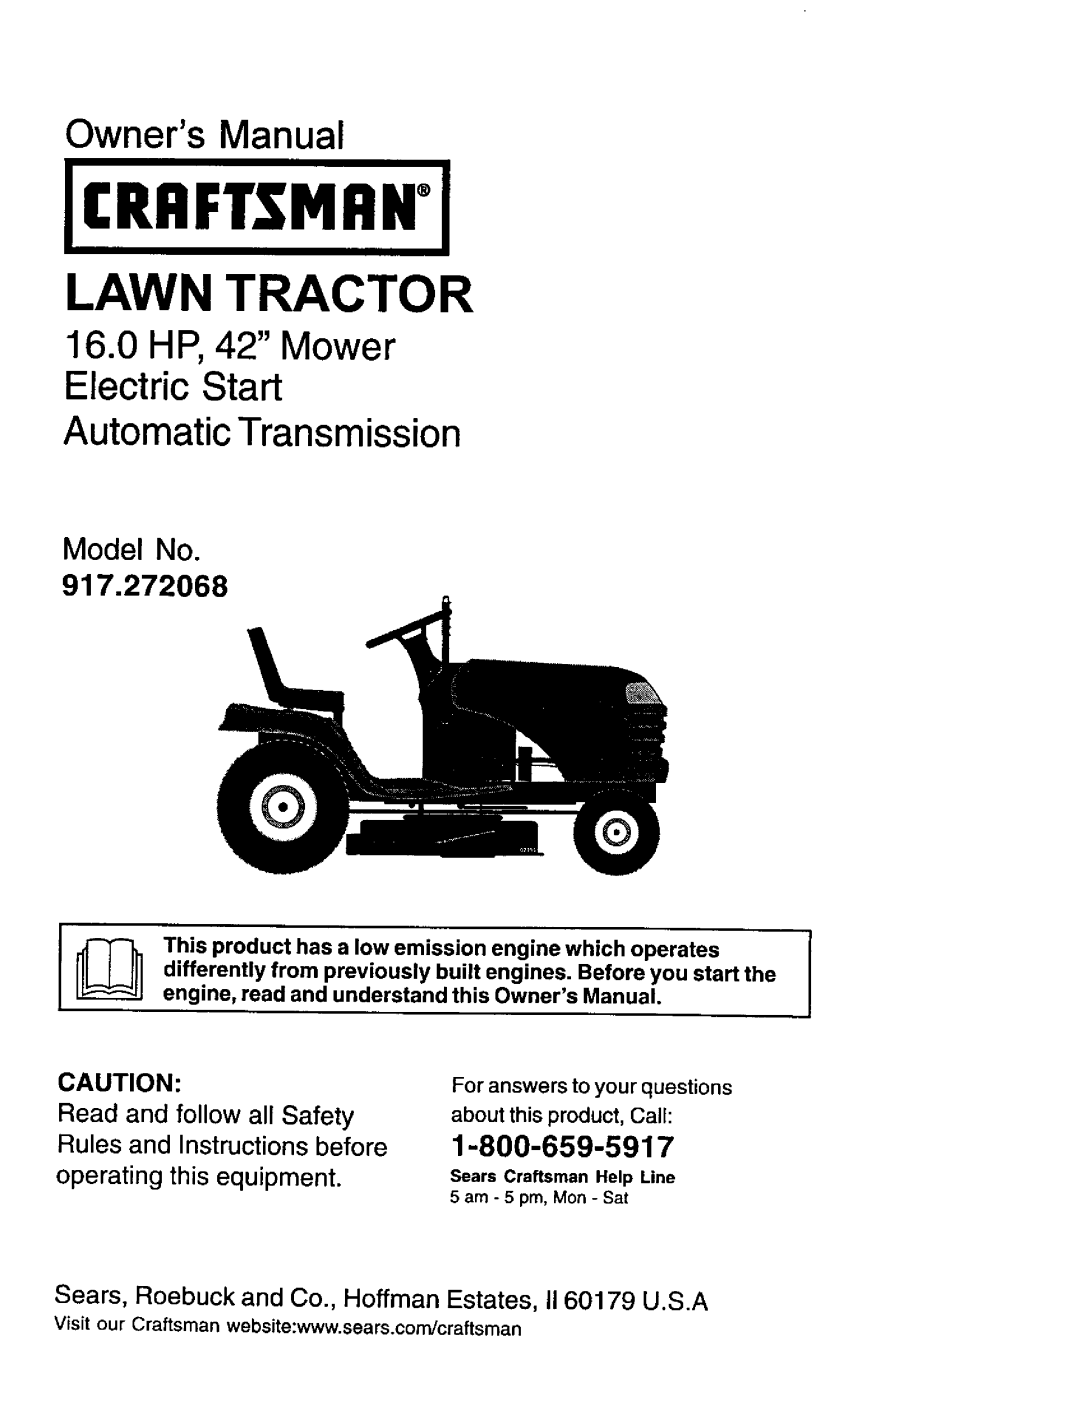 Craftsman 917.272068 owner manual 16.0HP, 42 Mower Electric Start, Automatic Transmission, Model No, Jcrrftsmrni 